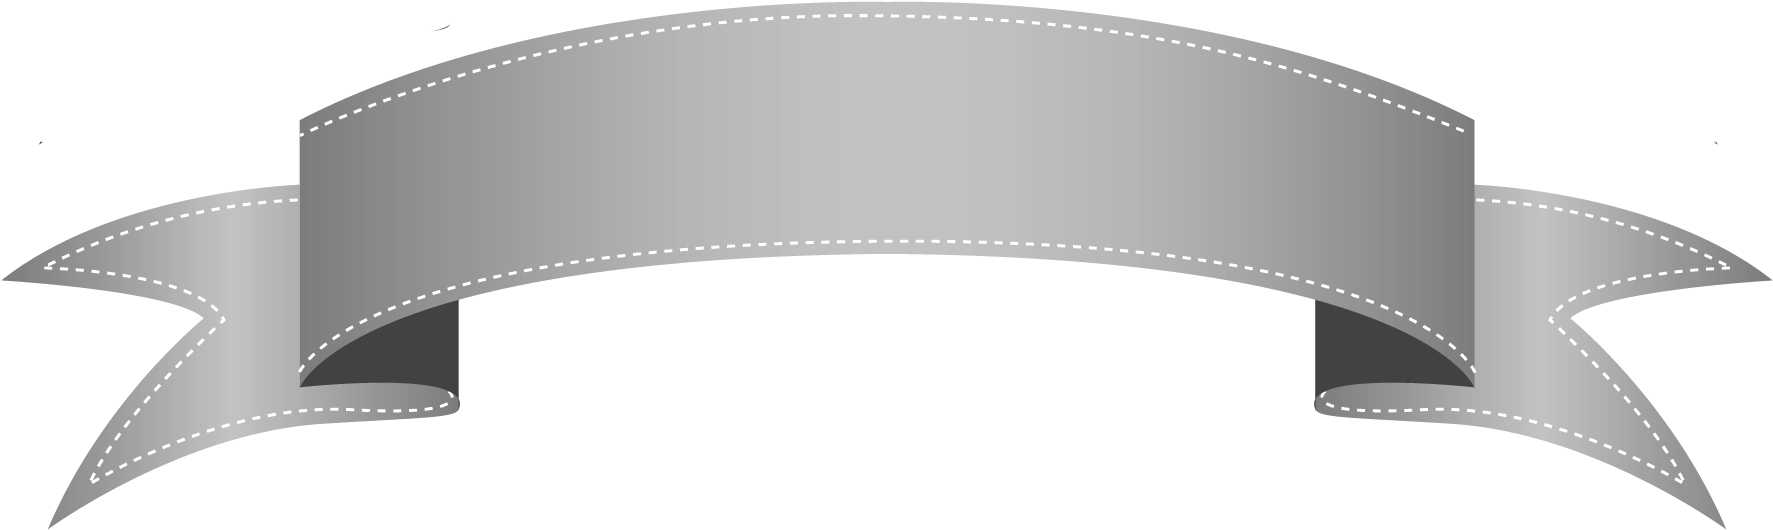 A Grey Ribbon With White Stitching